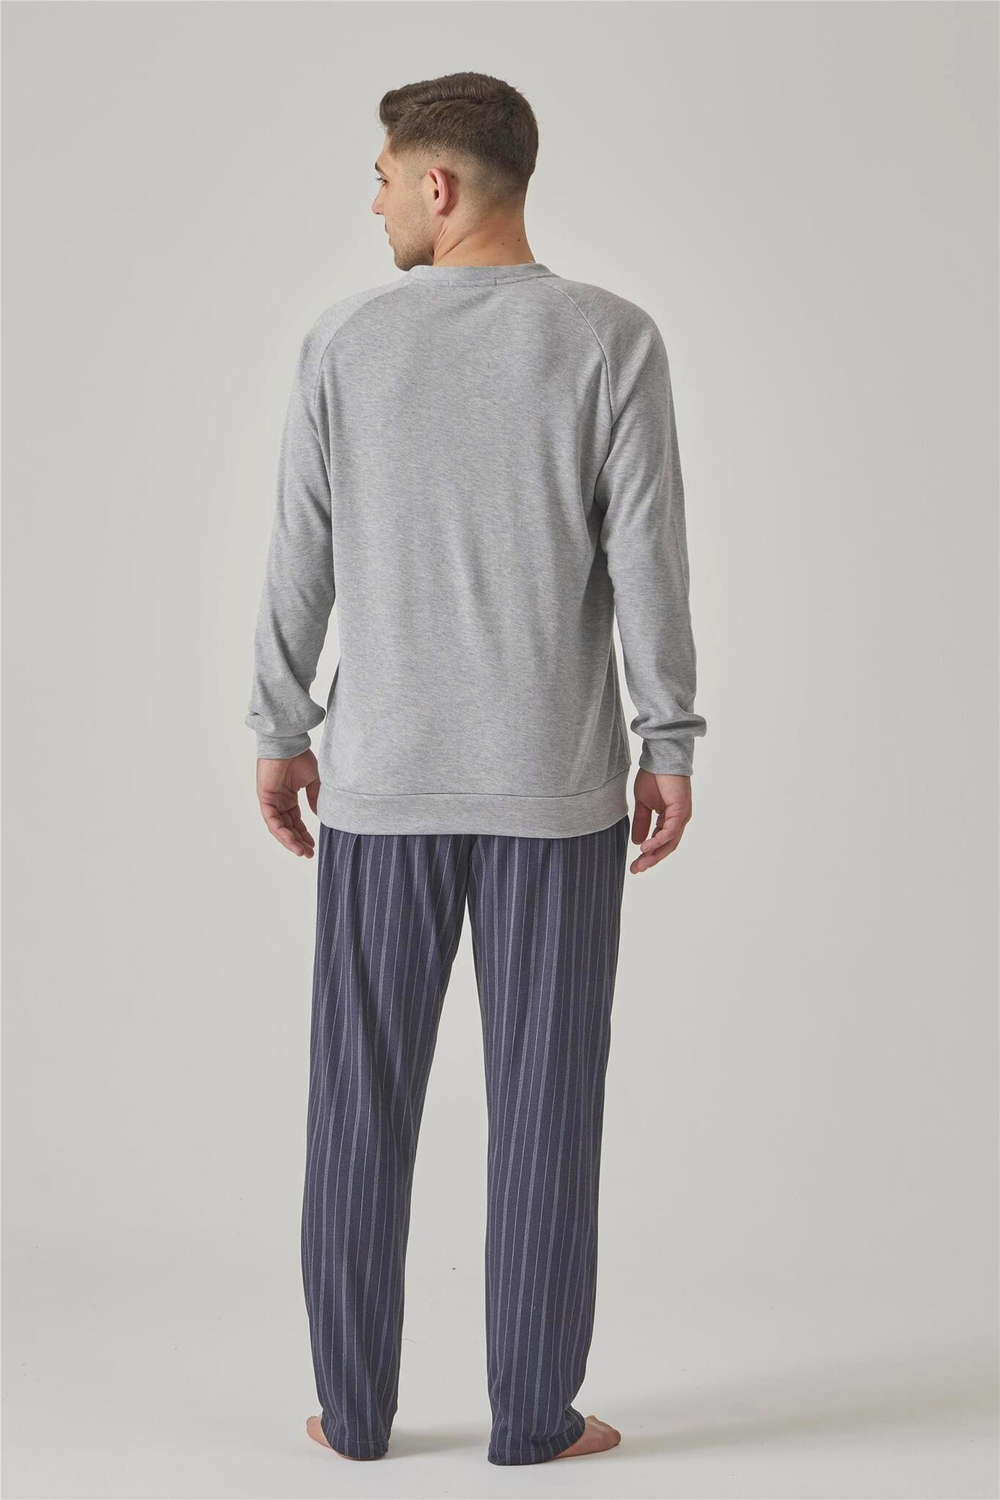 RELAX MODE - Пижама мужская пижама мужская со штанами - 10797